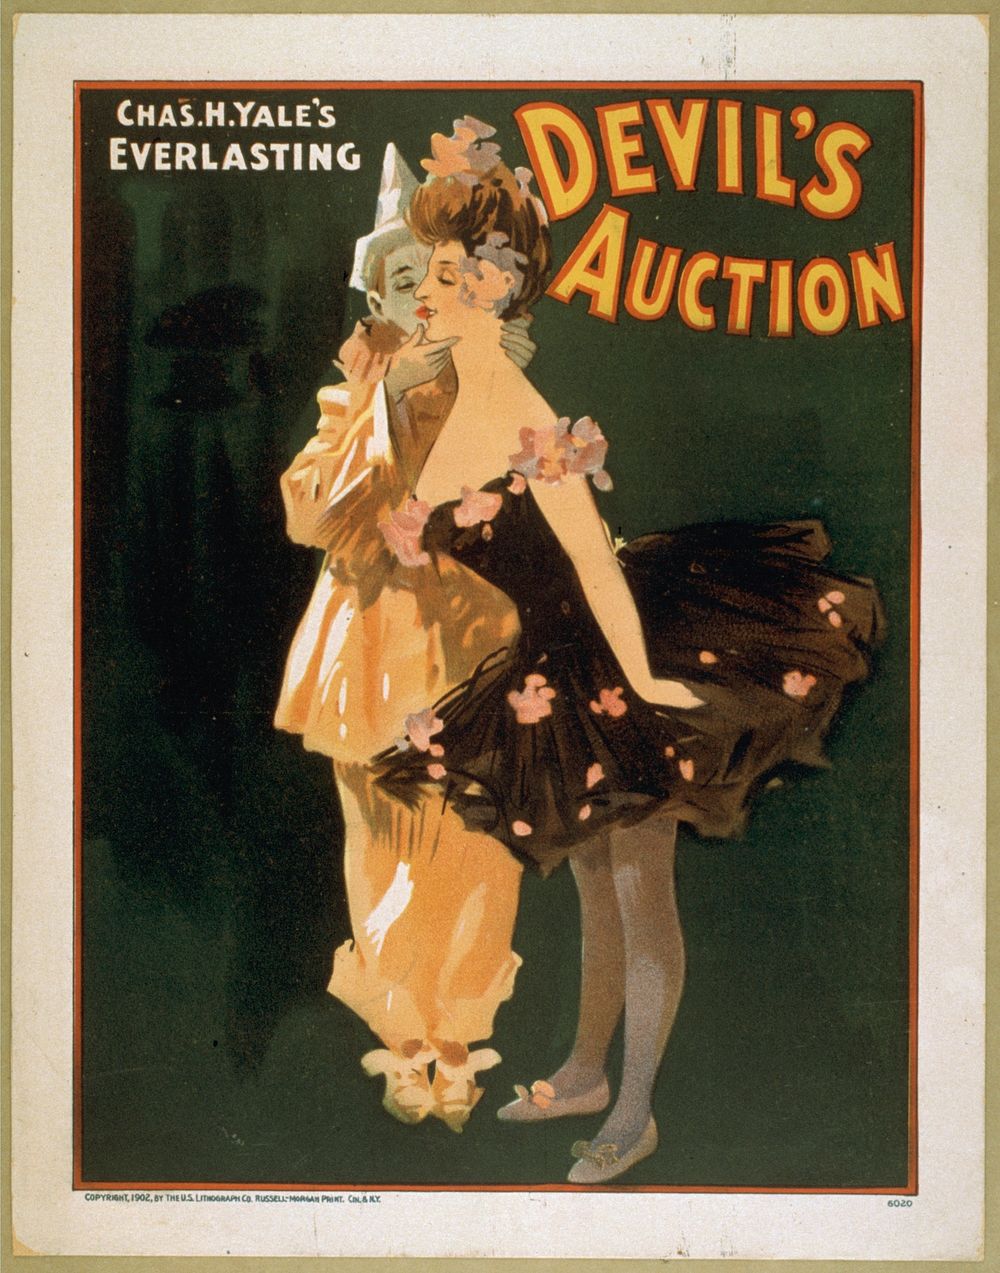 Chas. H. Yale's everlasting Devil's auction